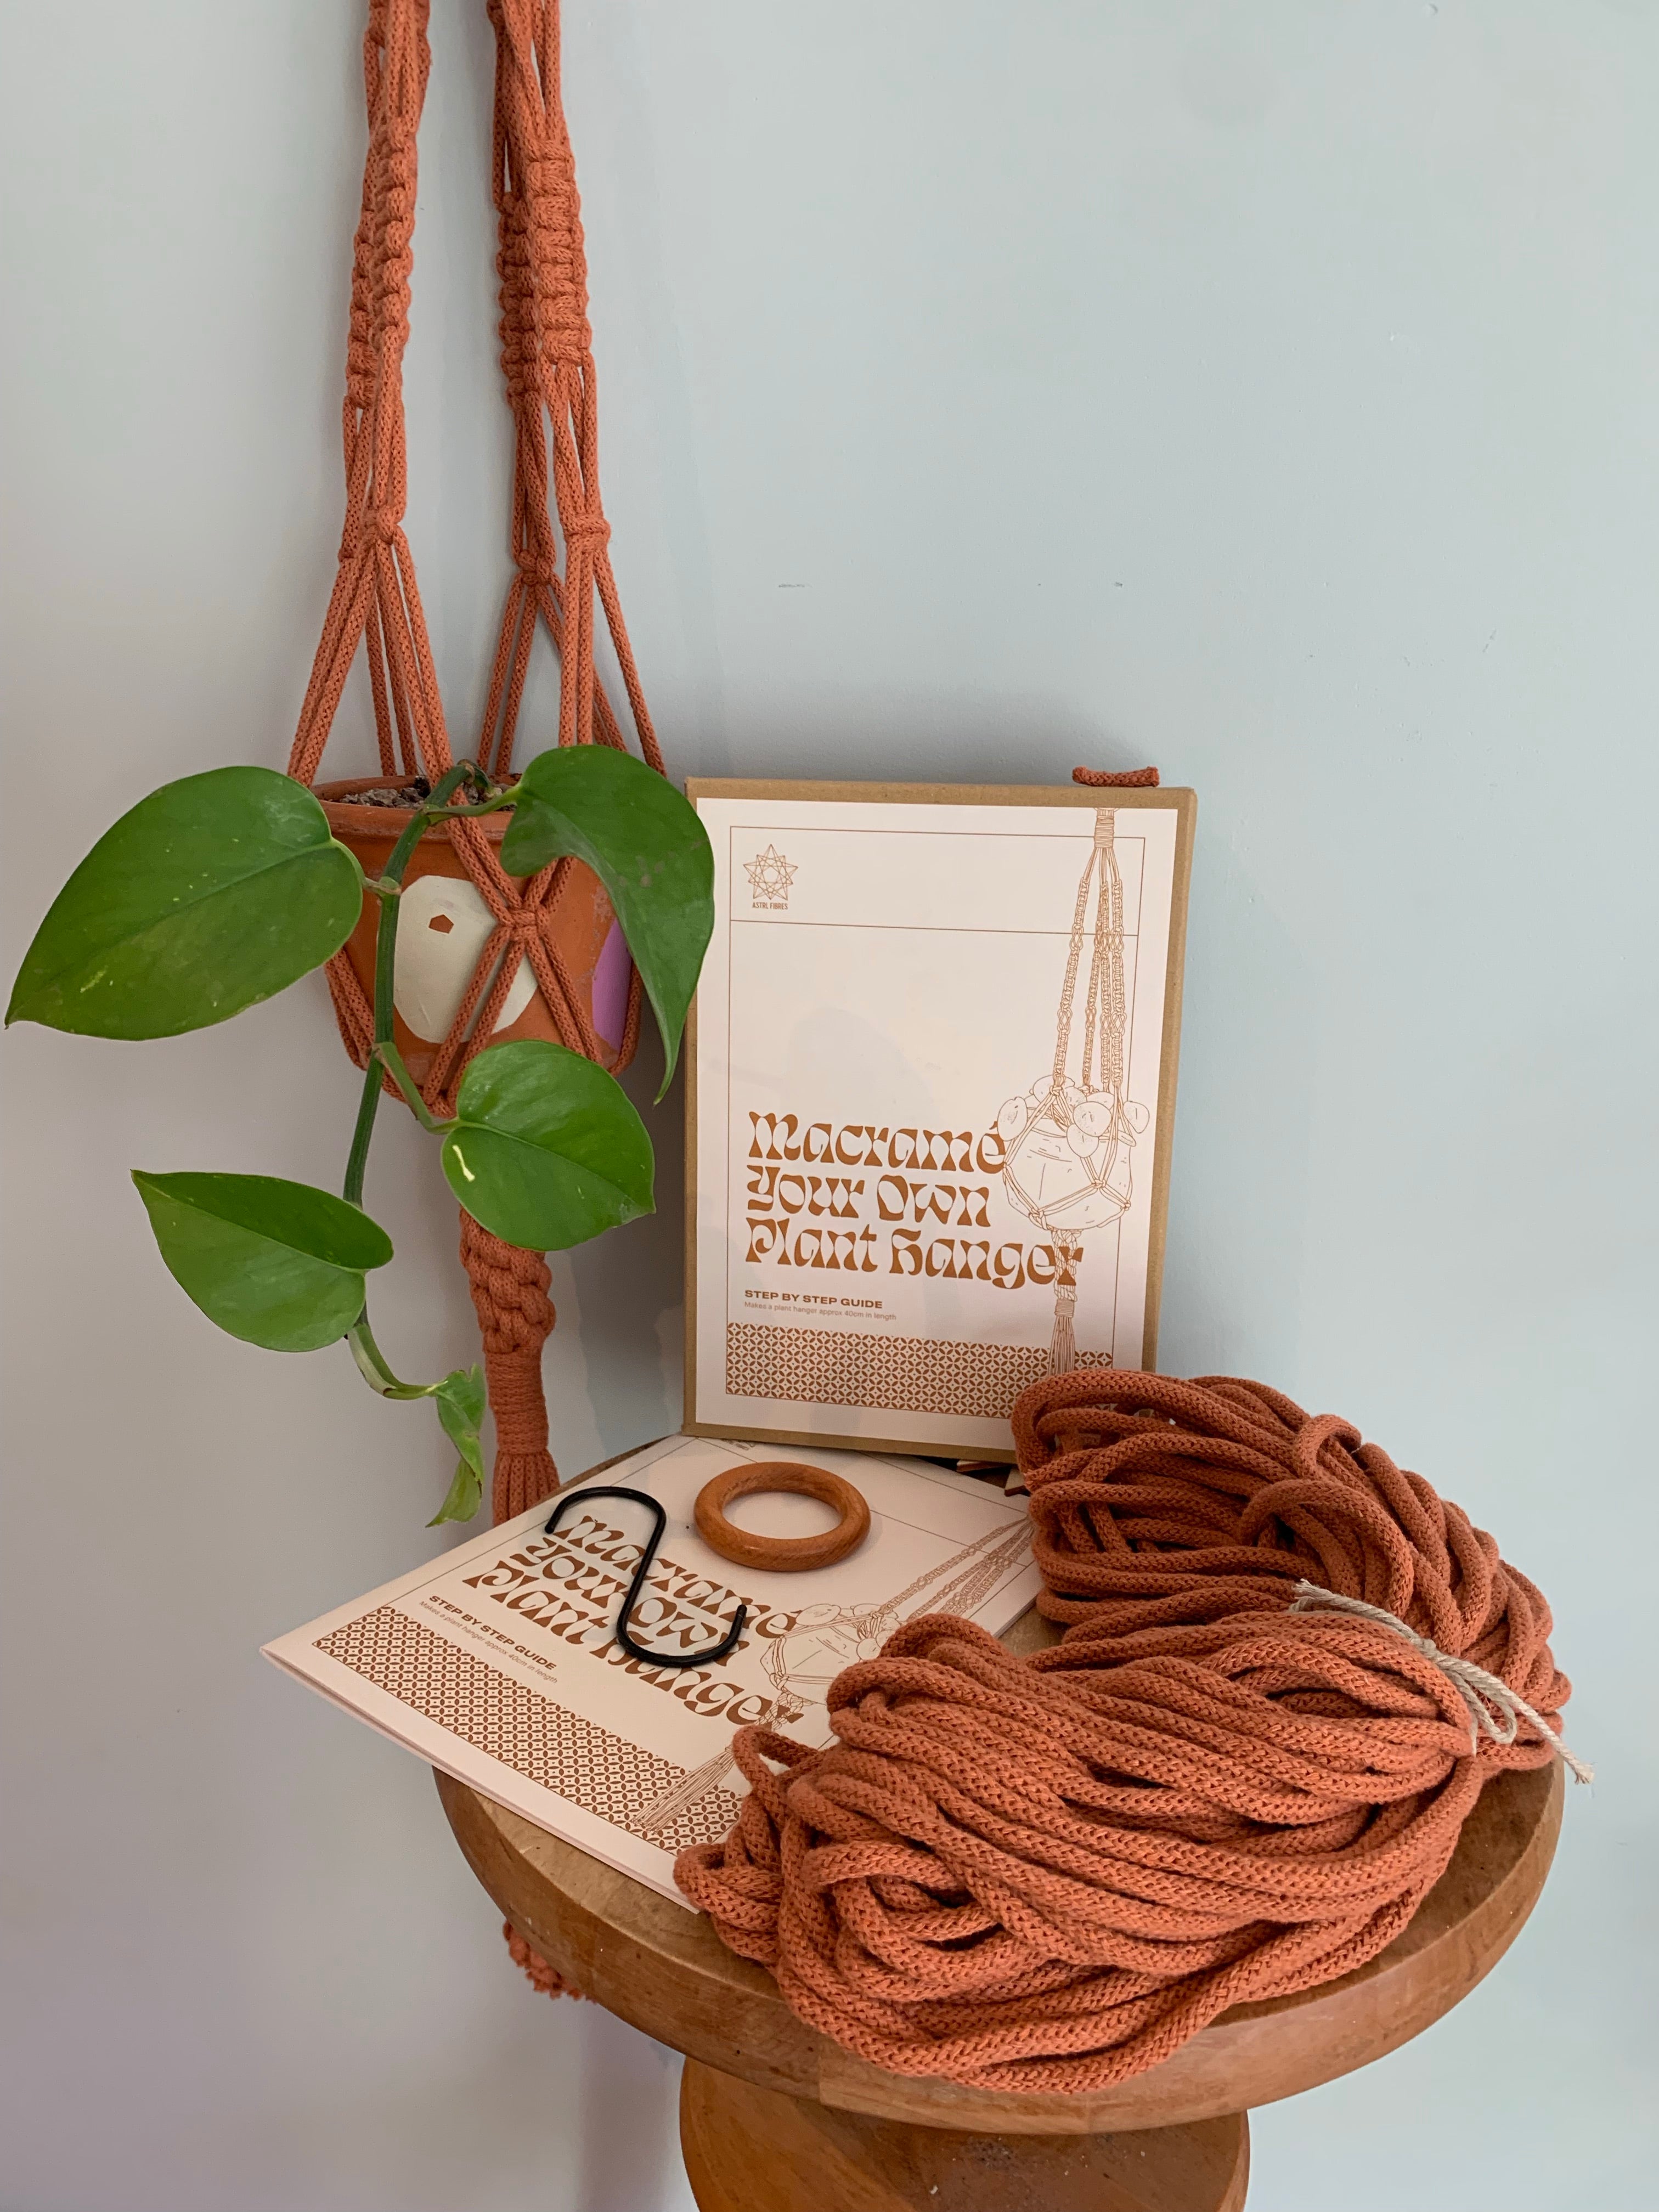 The Macramé Your Own Plant Hanger Kit